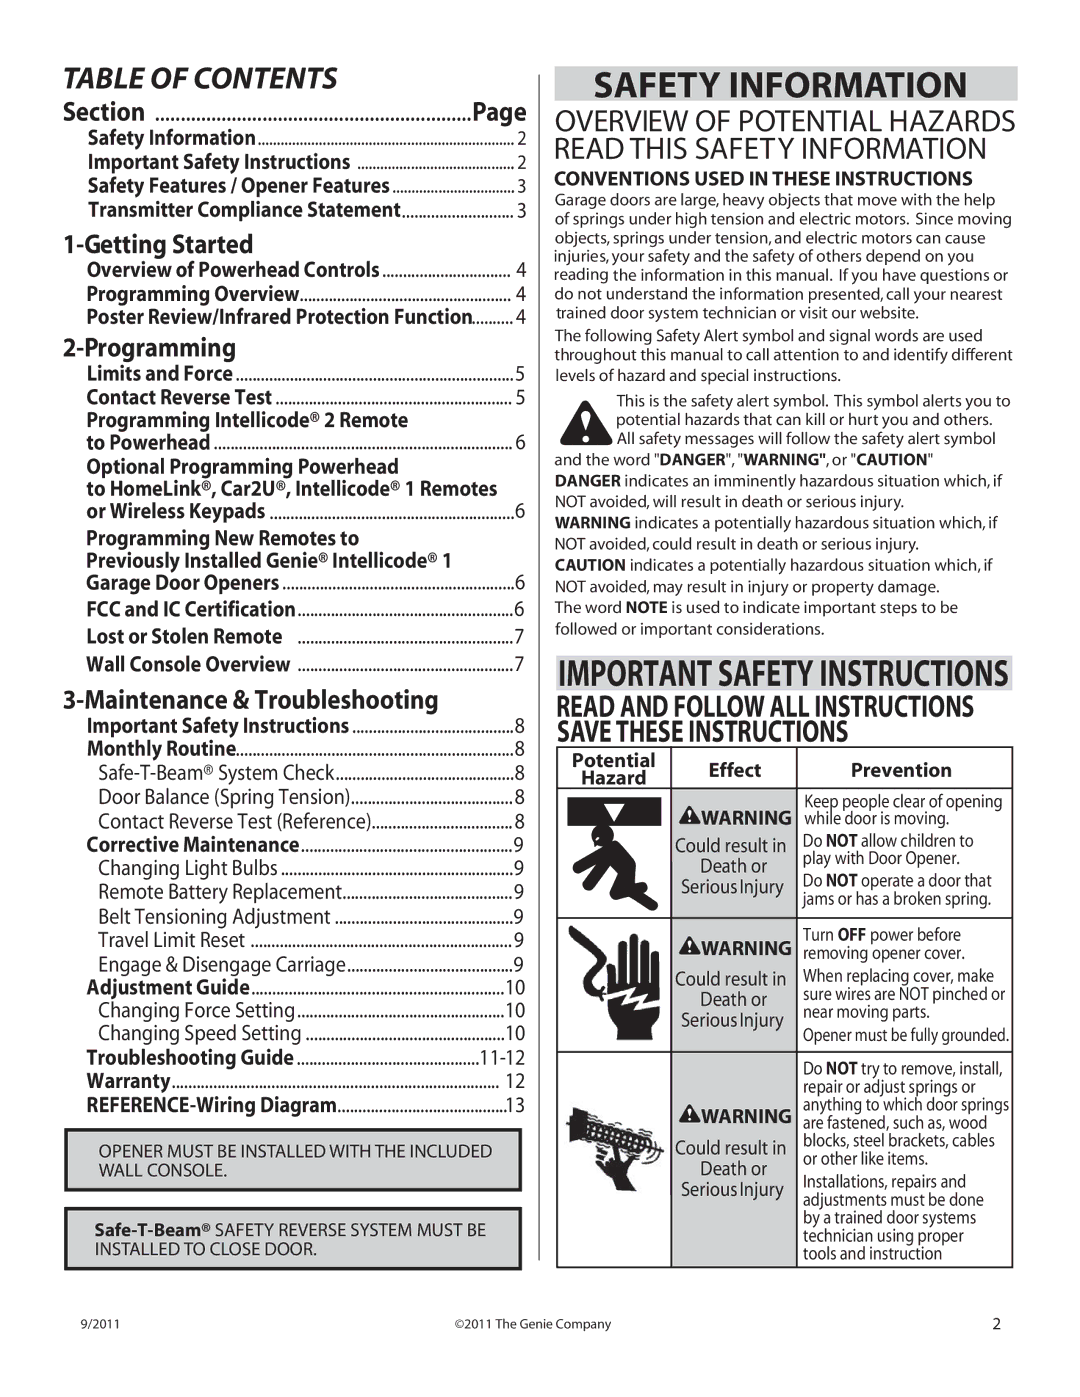 Genie 1000 manual Safety Information 